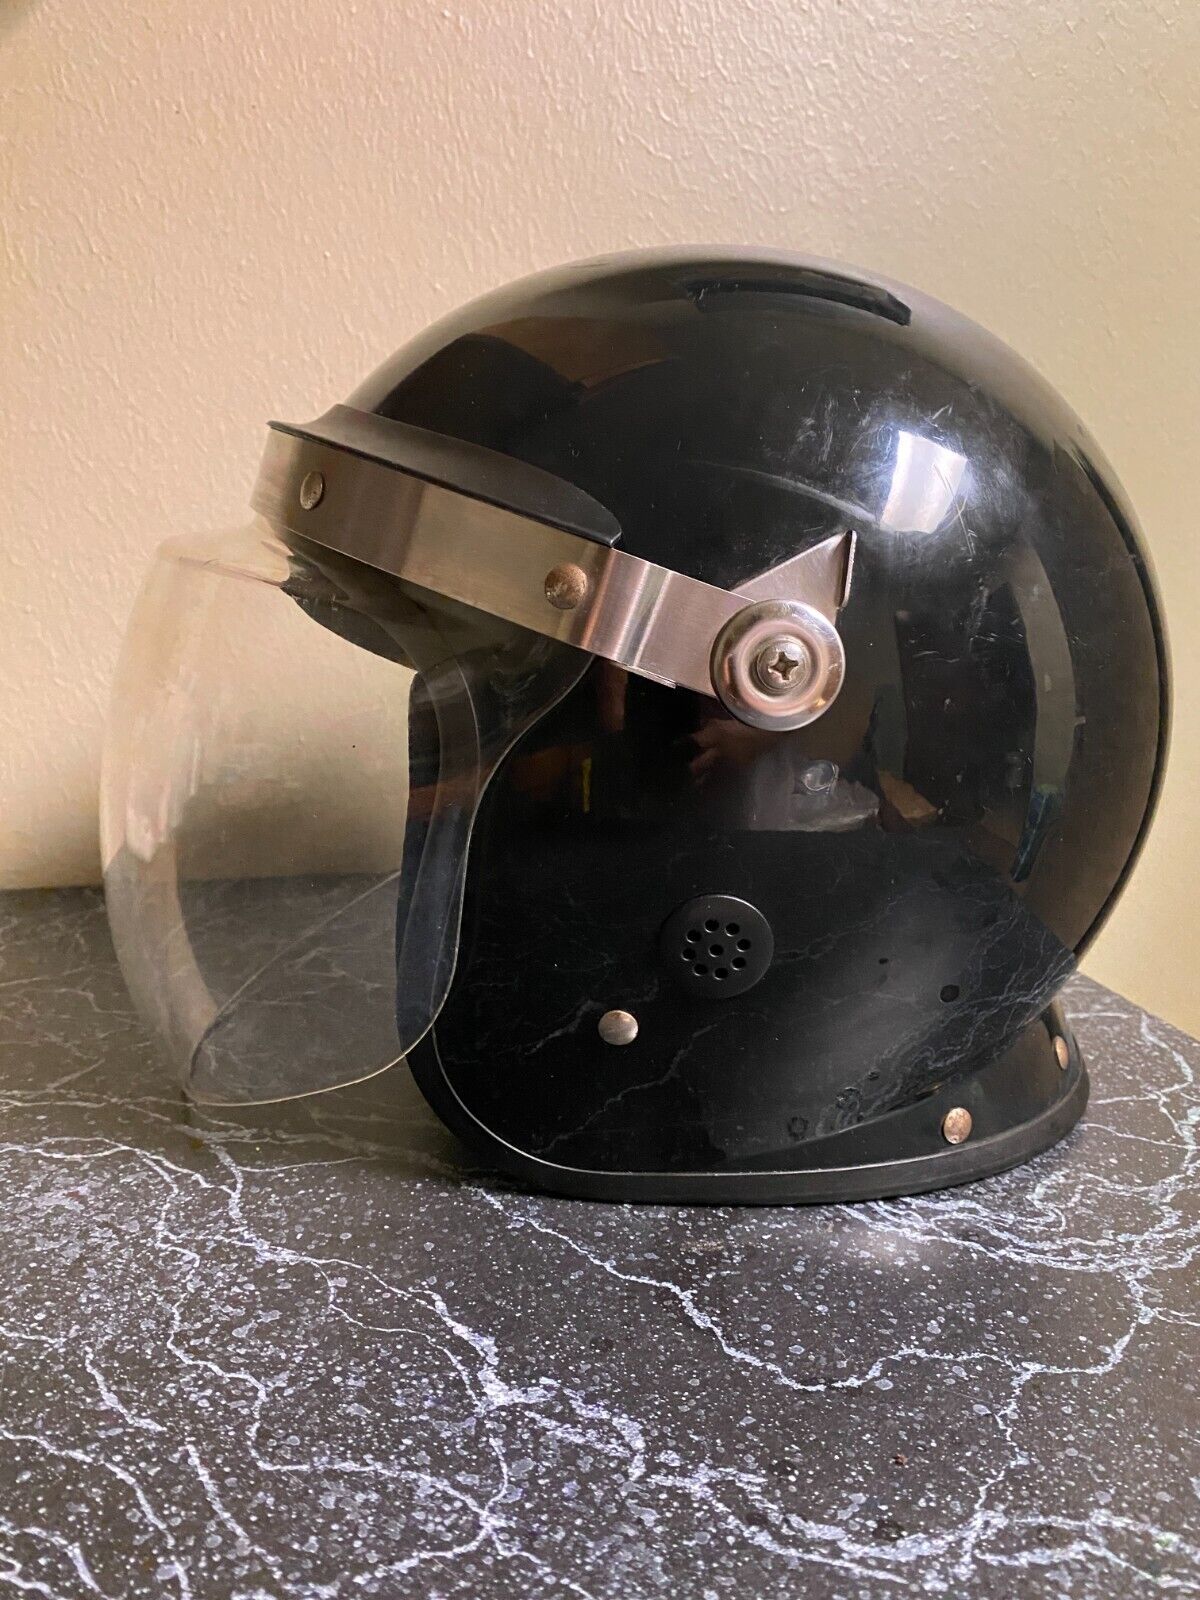 Police Riot Helmet